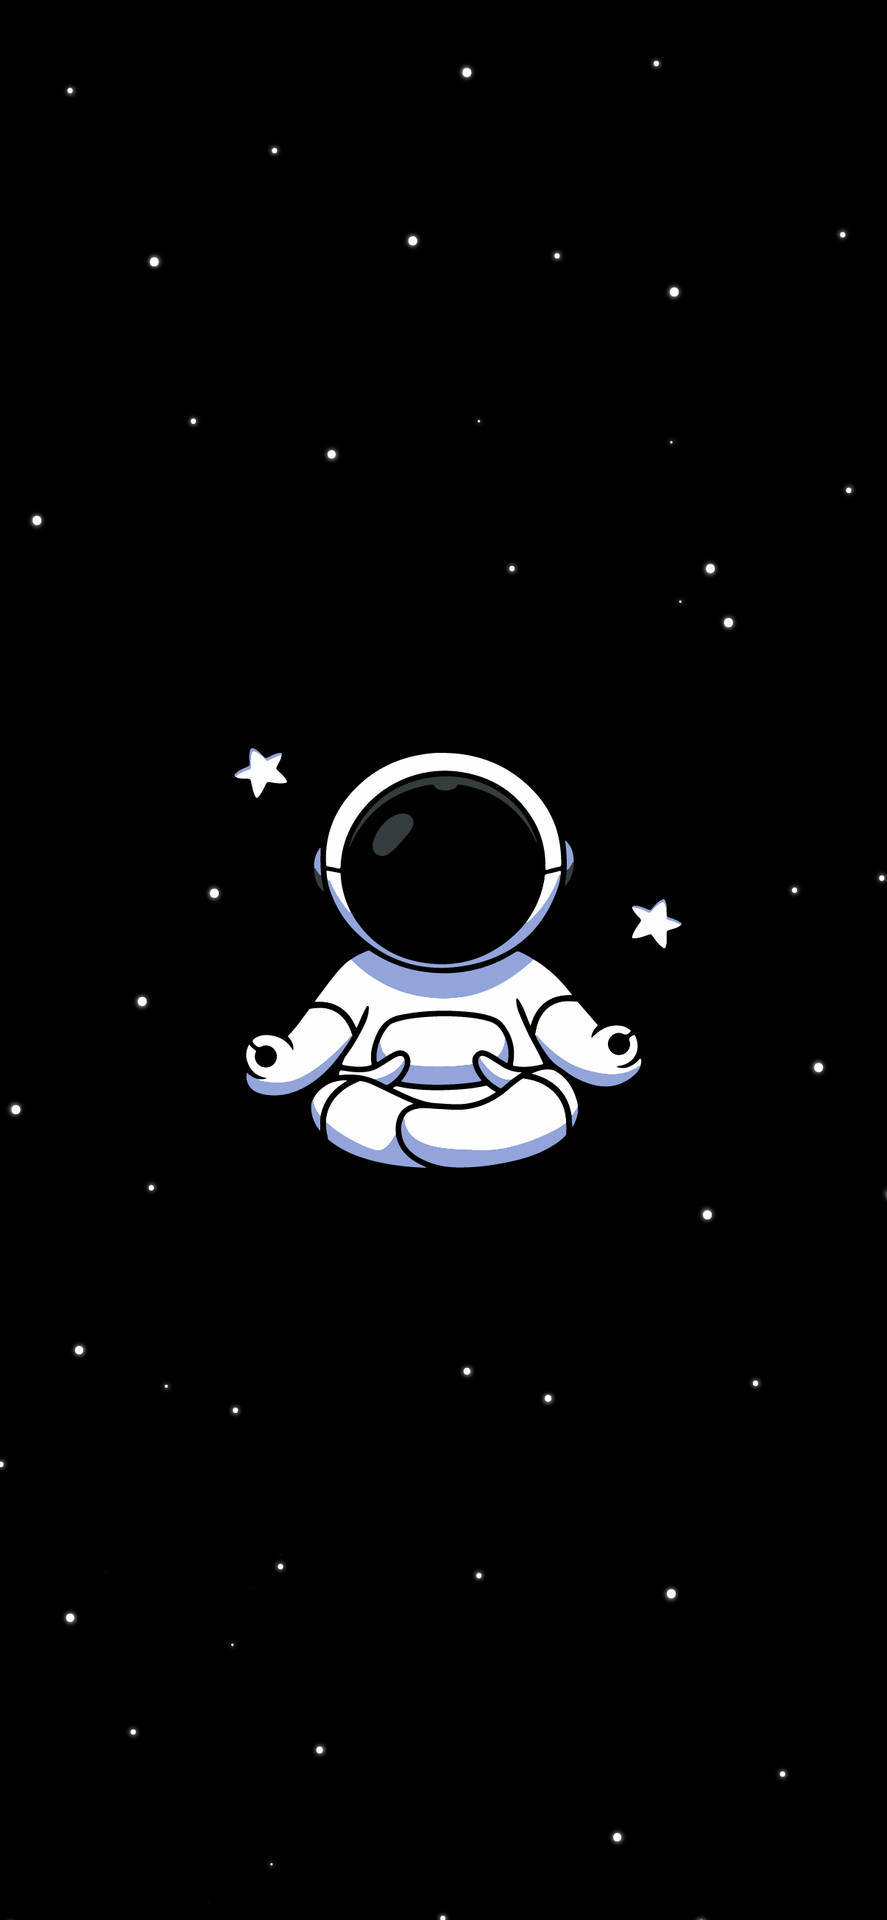 En astronaut i rummet med stjerner i baggrunden Wallpaper